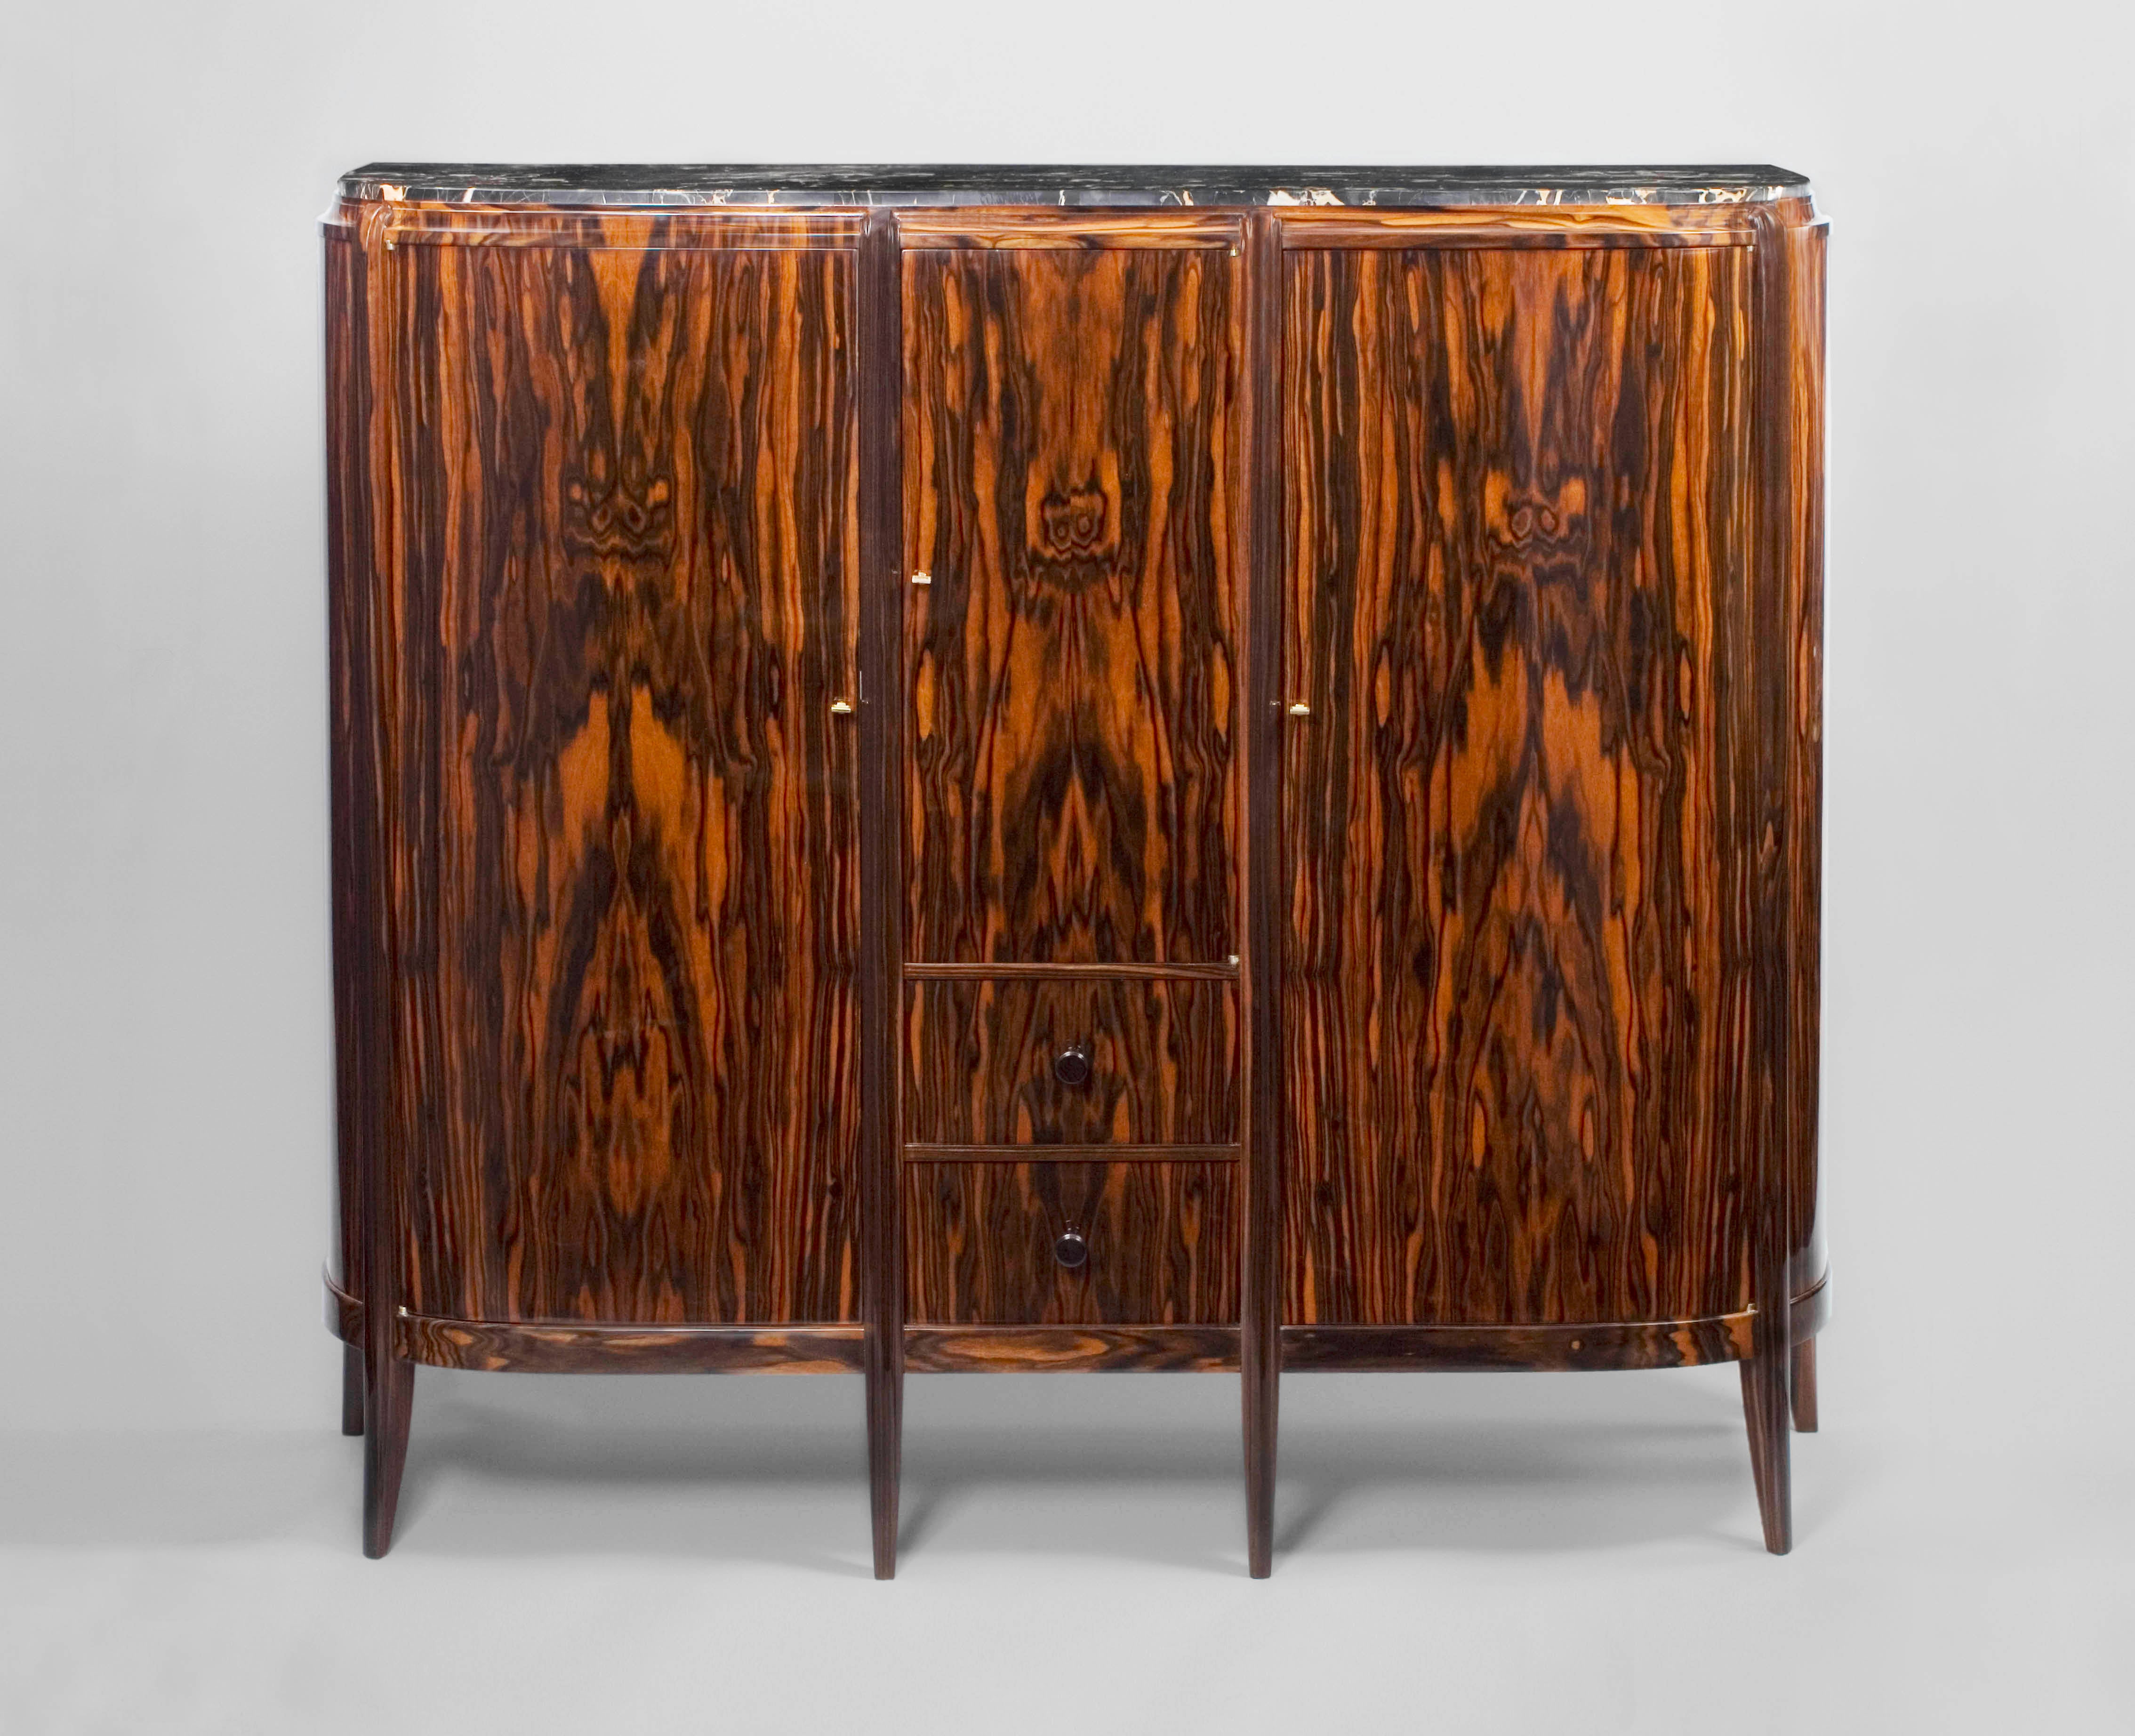 Leon Jallot - Rare Macassar ebony display cabinet - Circa 1924